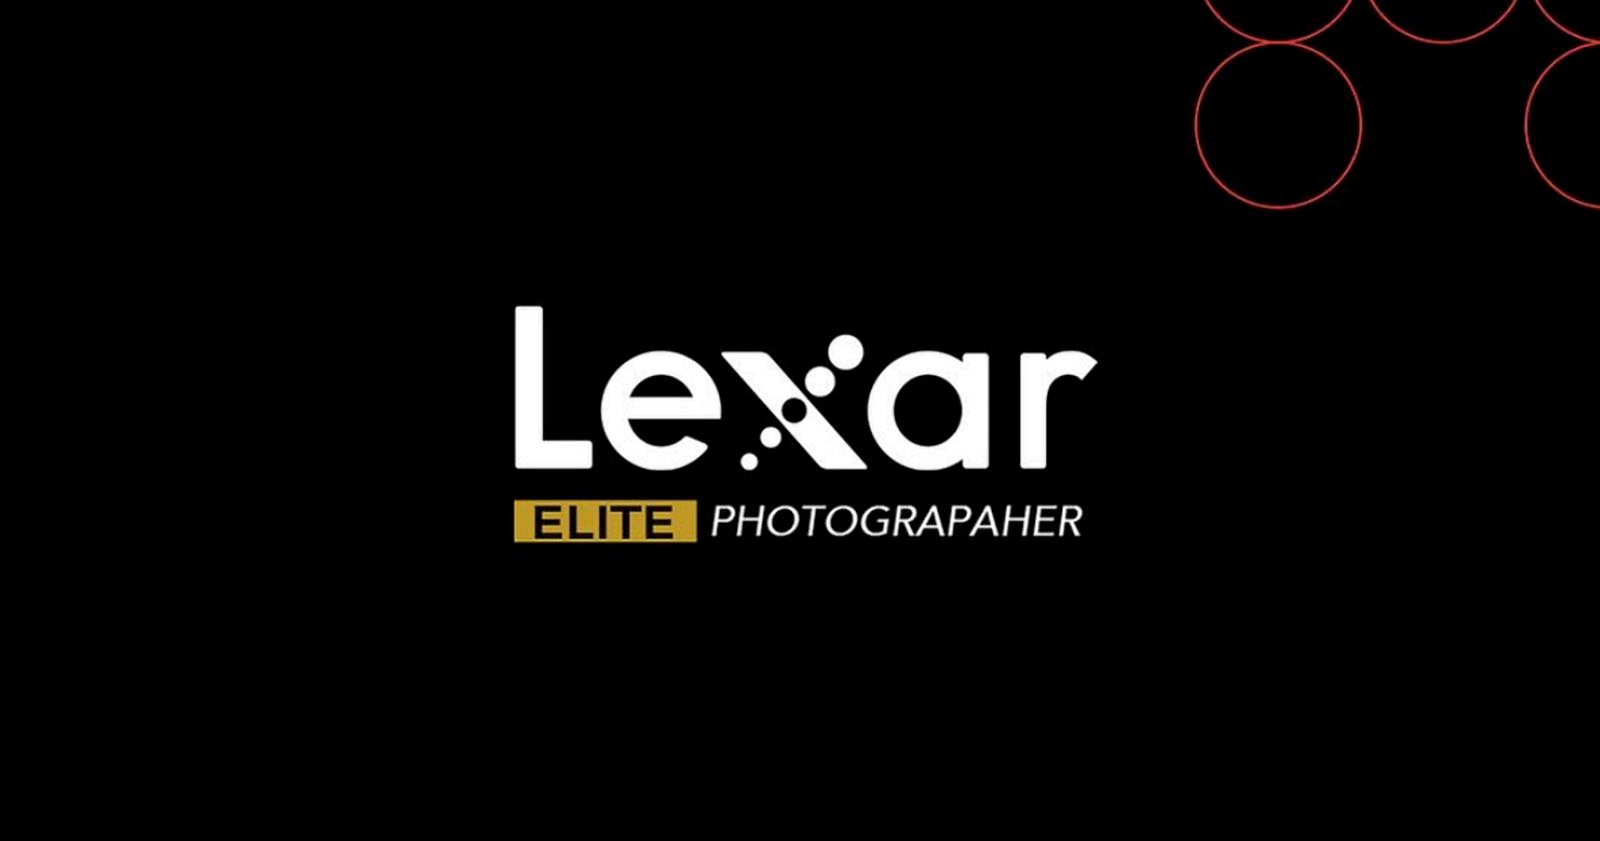  lexar elite photographers roster was entirely men 